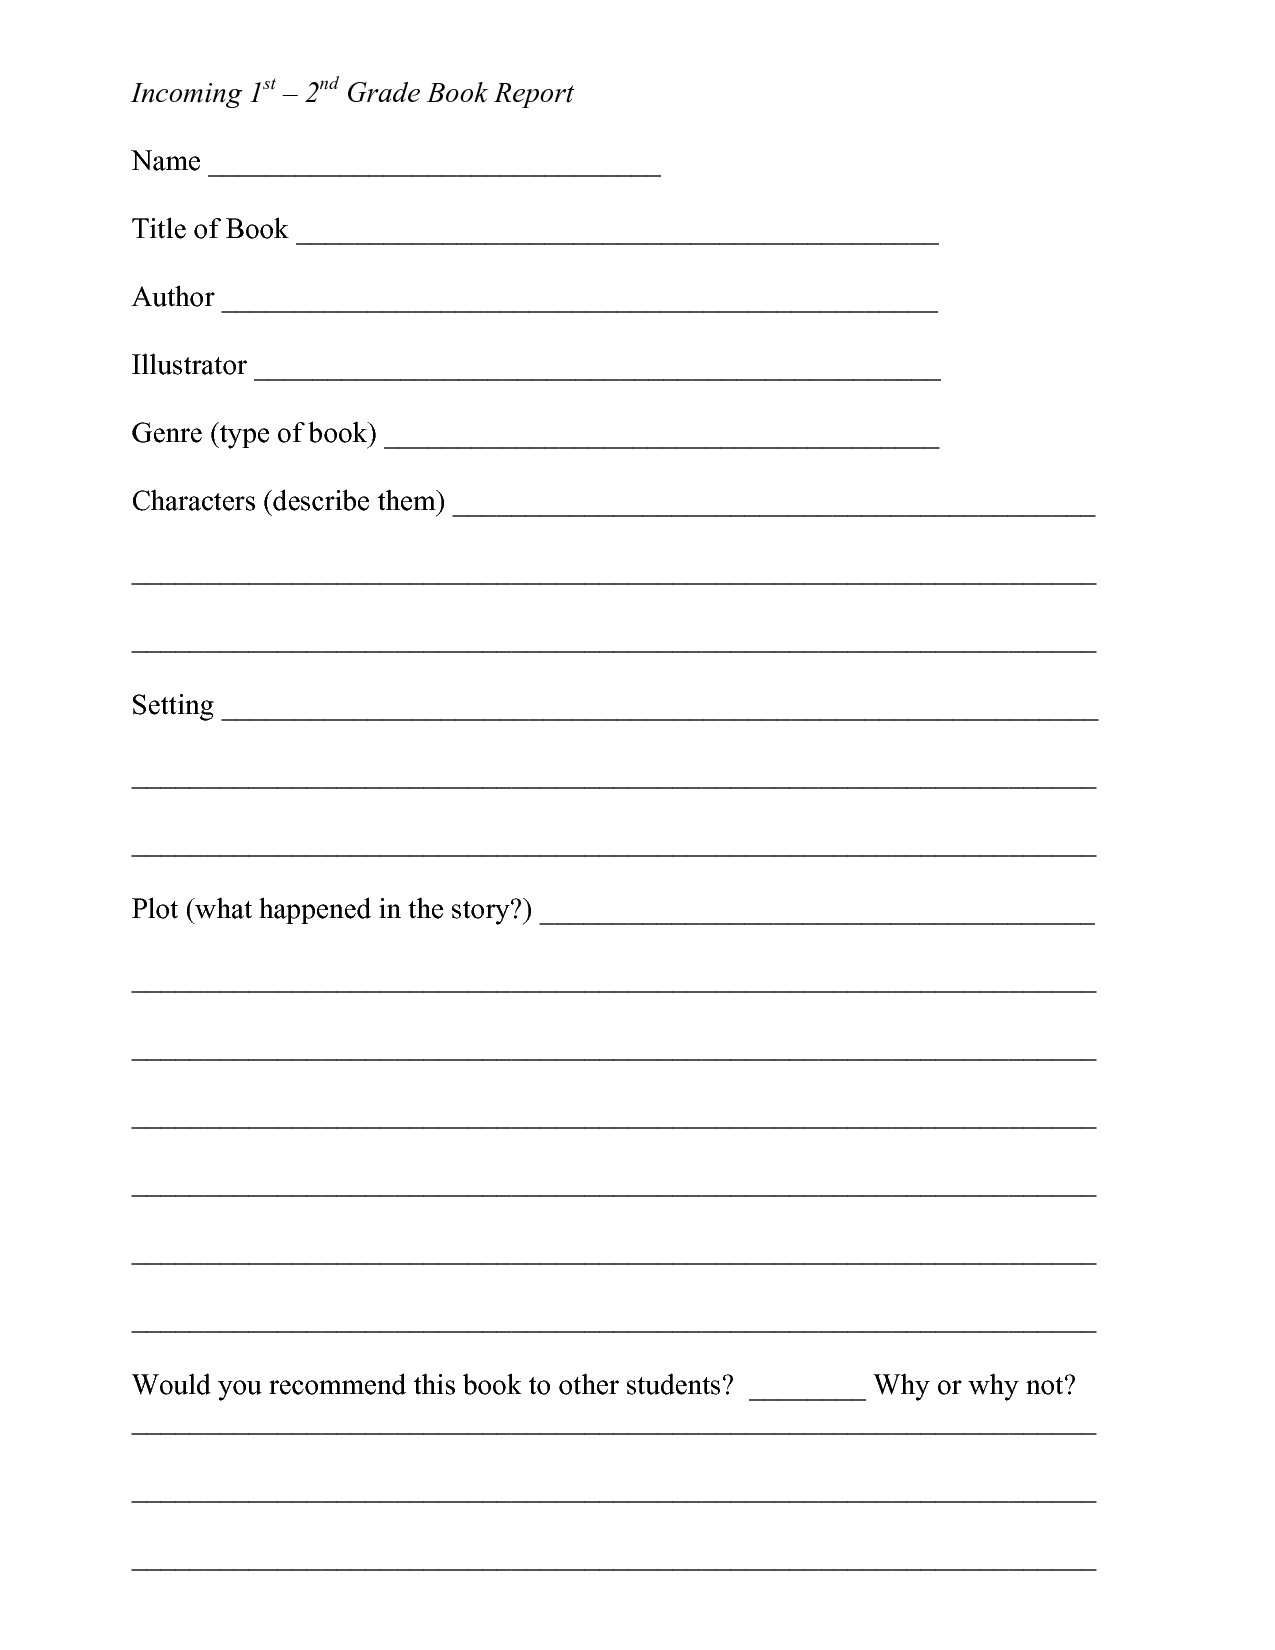 Book Report Template 2Nd Grade Free – Book Report Form For Book Report Template 2Nd Grade